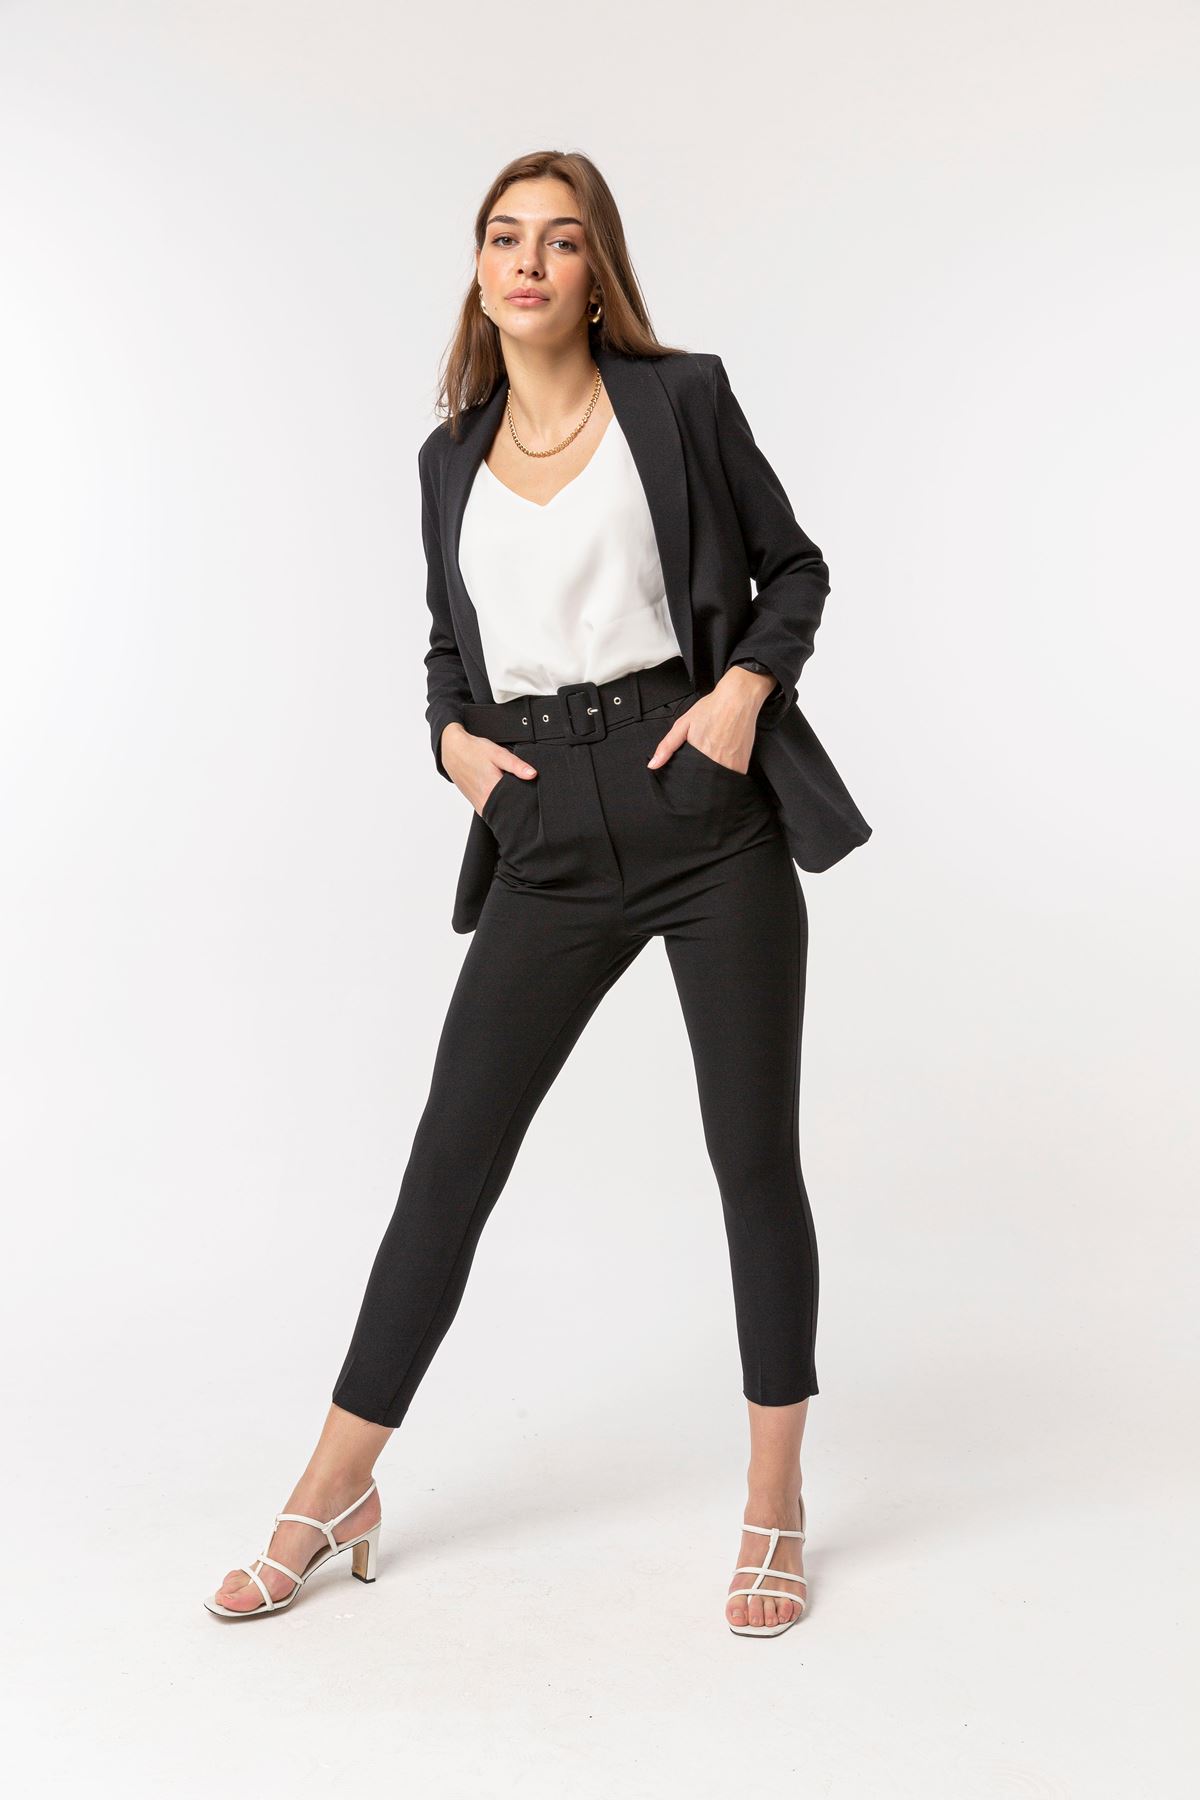 Atlas Fabric Ankle Length Women'S Trouser With Belt - Black